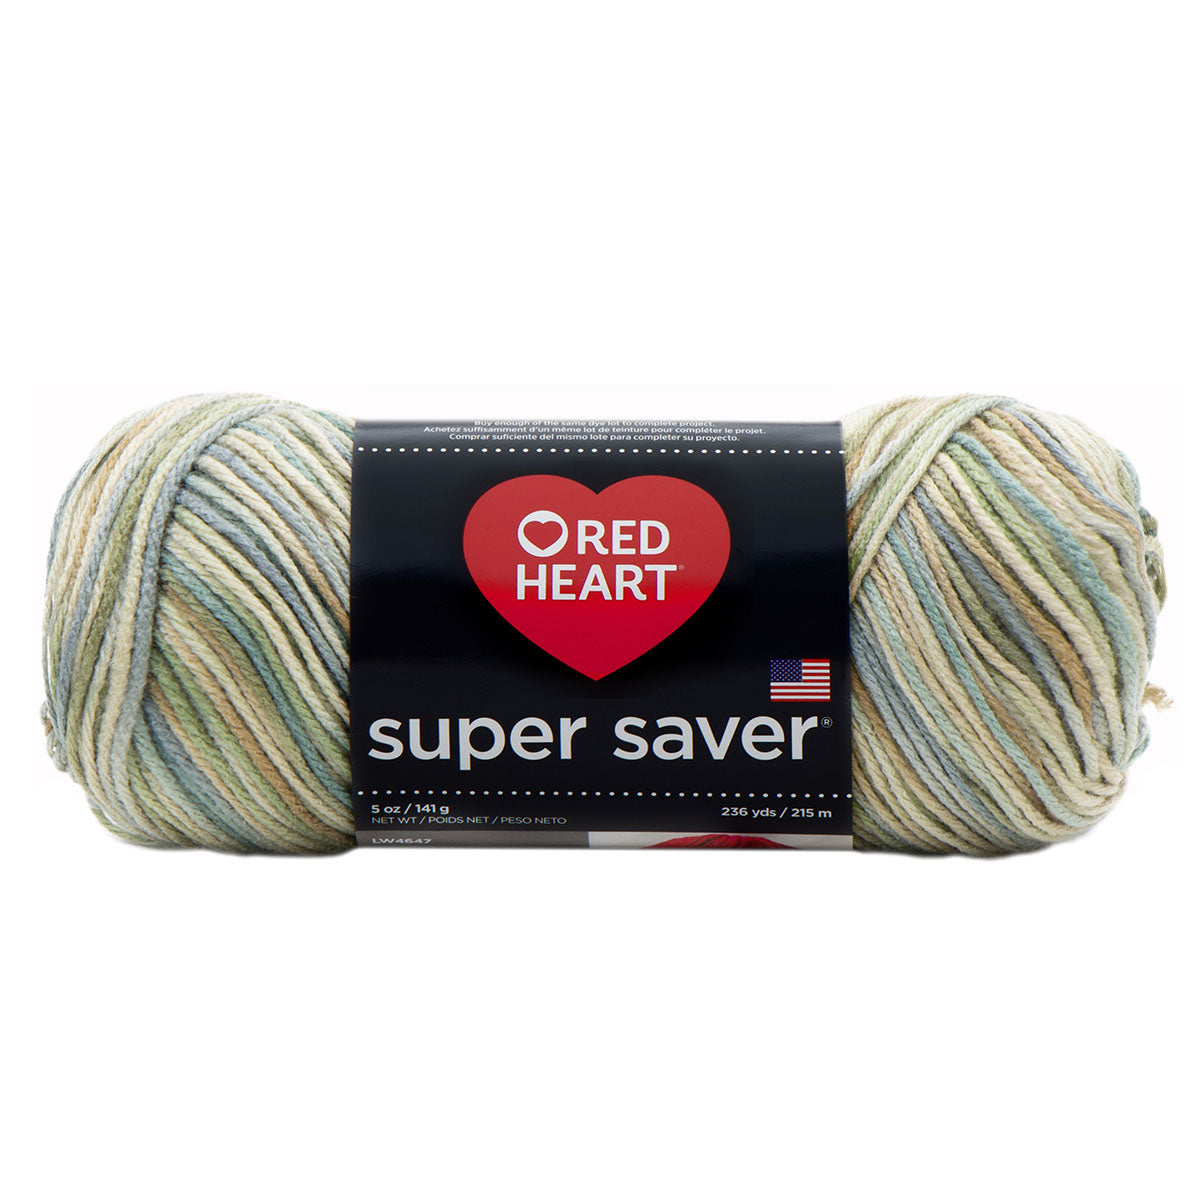 Red Heart Super Saver Yarn - 364 yds